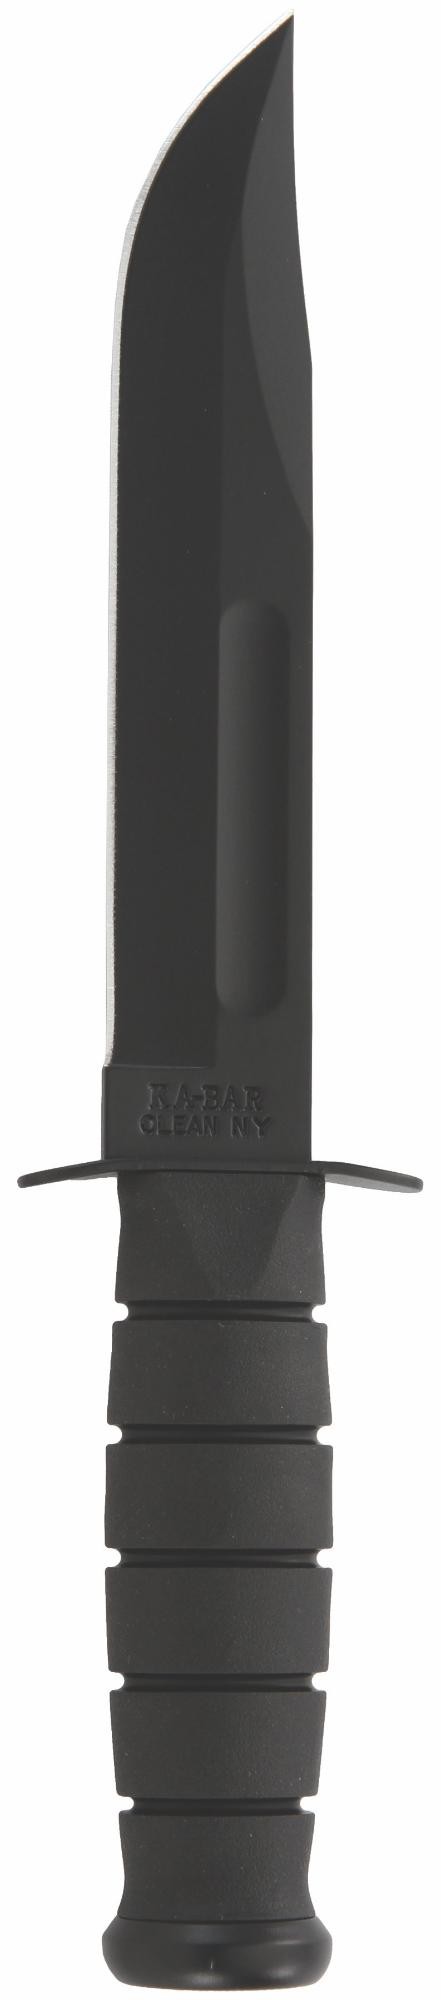 Full Size Black KA-BAR® - Straight Edge with Hard Plastic Sheath (1213)